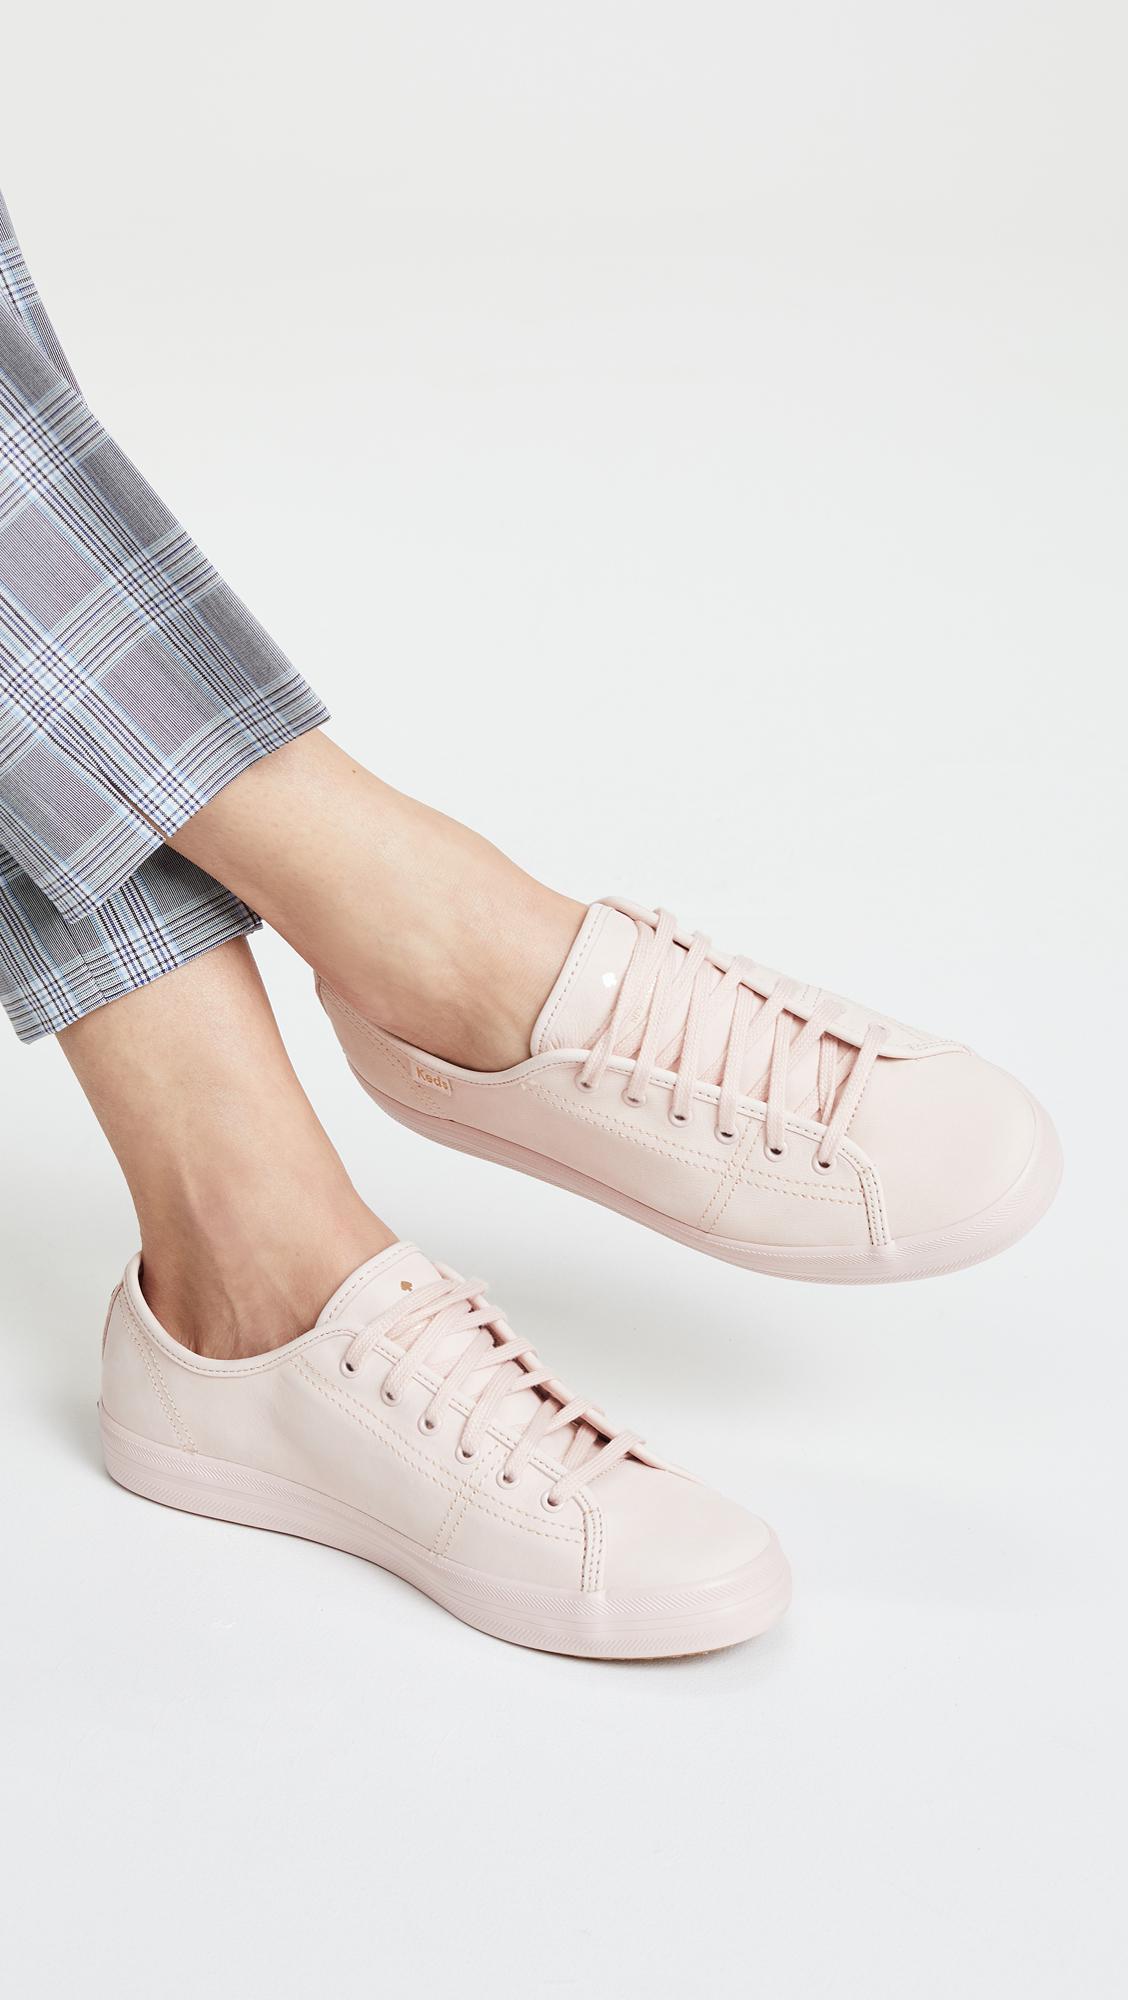 Keds X Kate Spade New York Kickstart Sneakers in Pink | Lyst